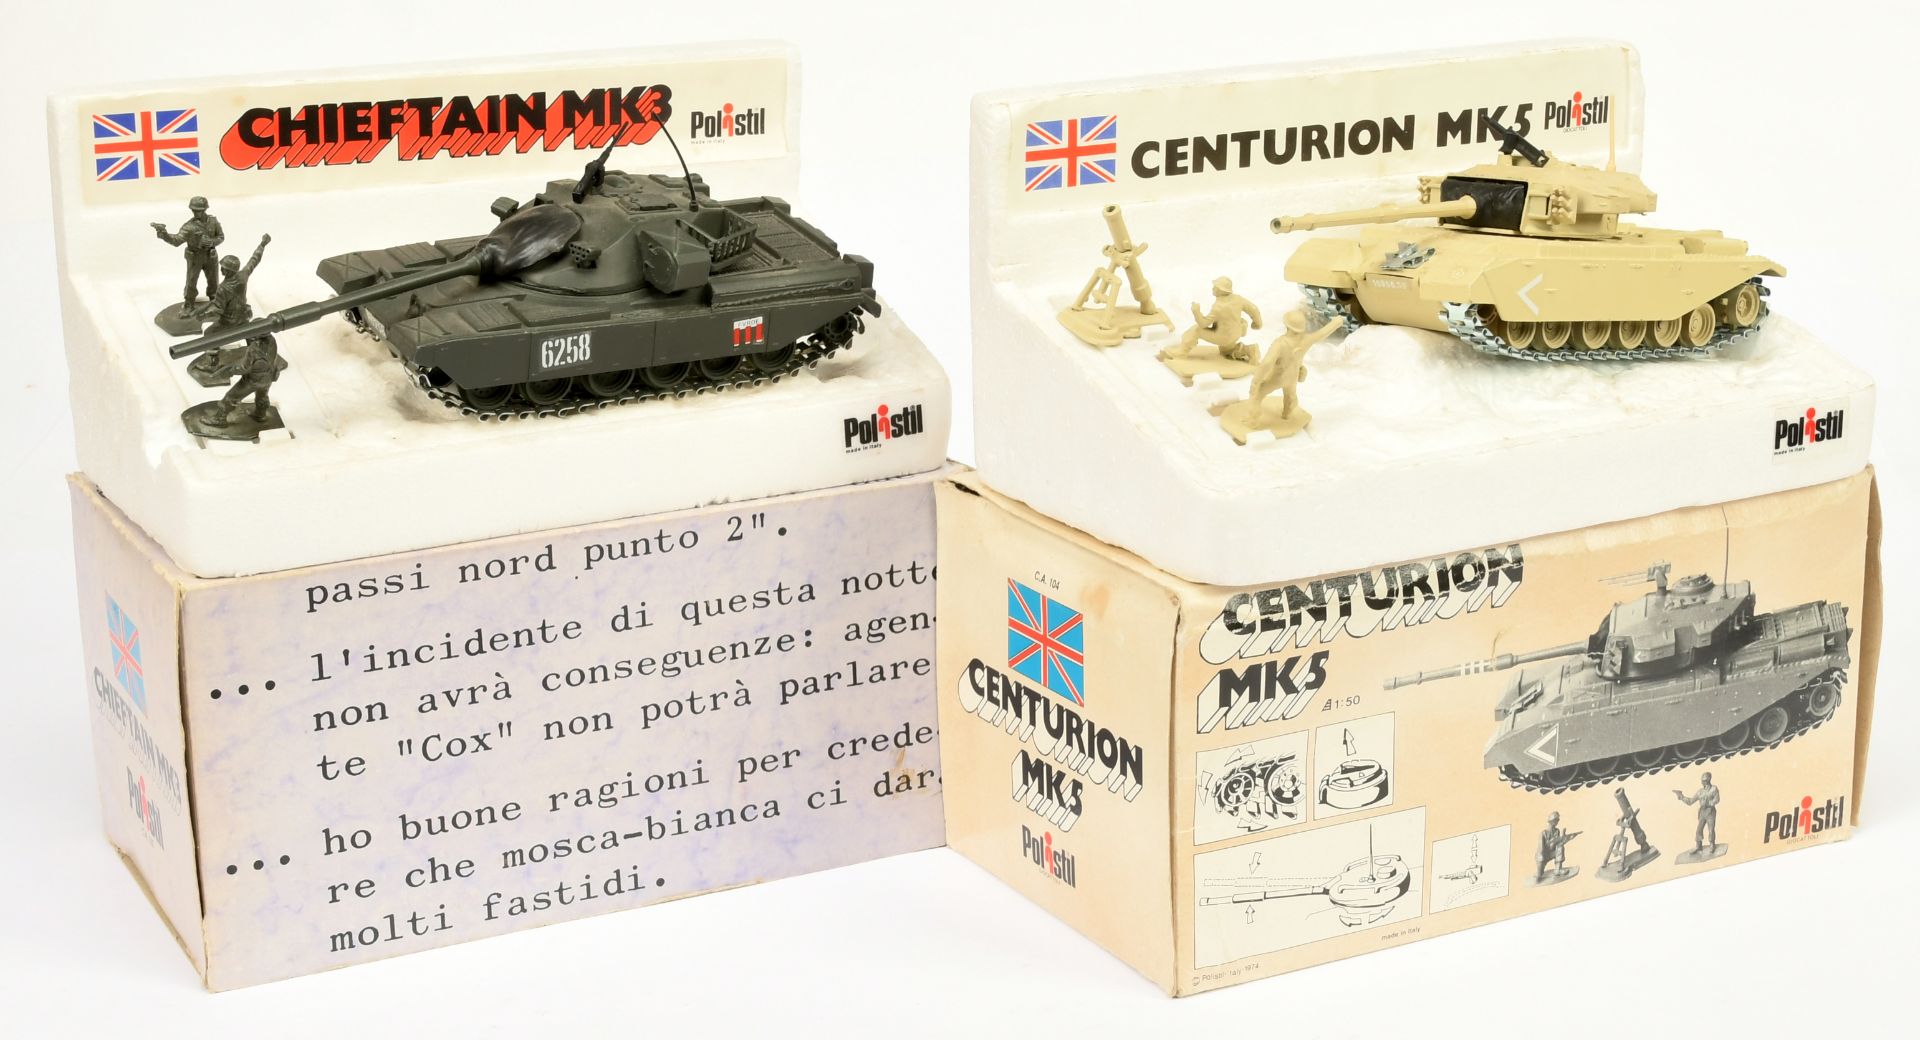 Polistil (1/50th) scale Tanks a pair - (1) CA102 Chieftain MK3 - dark green and (2) CA104 Centuri...